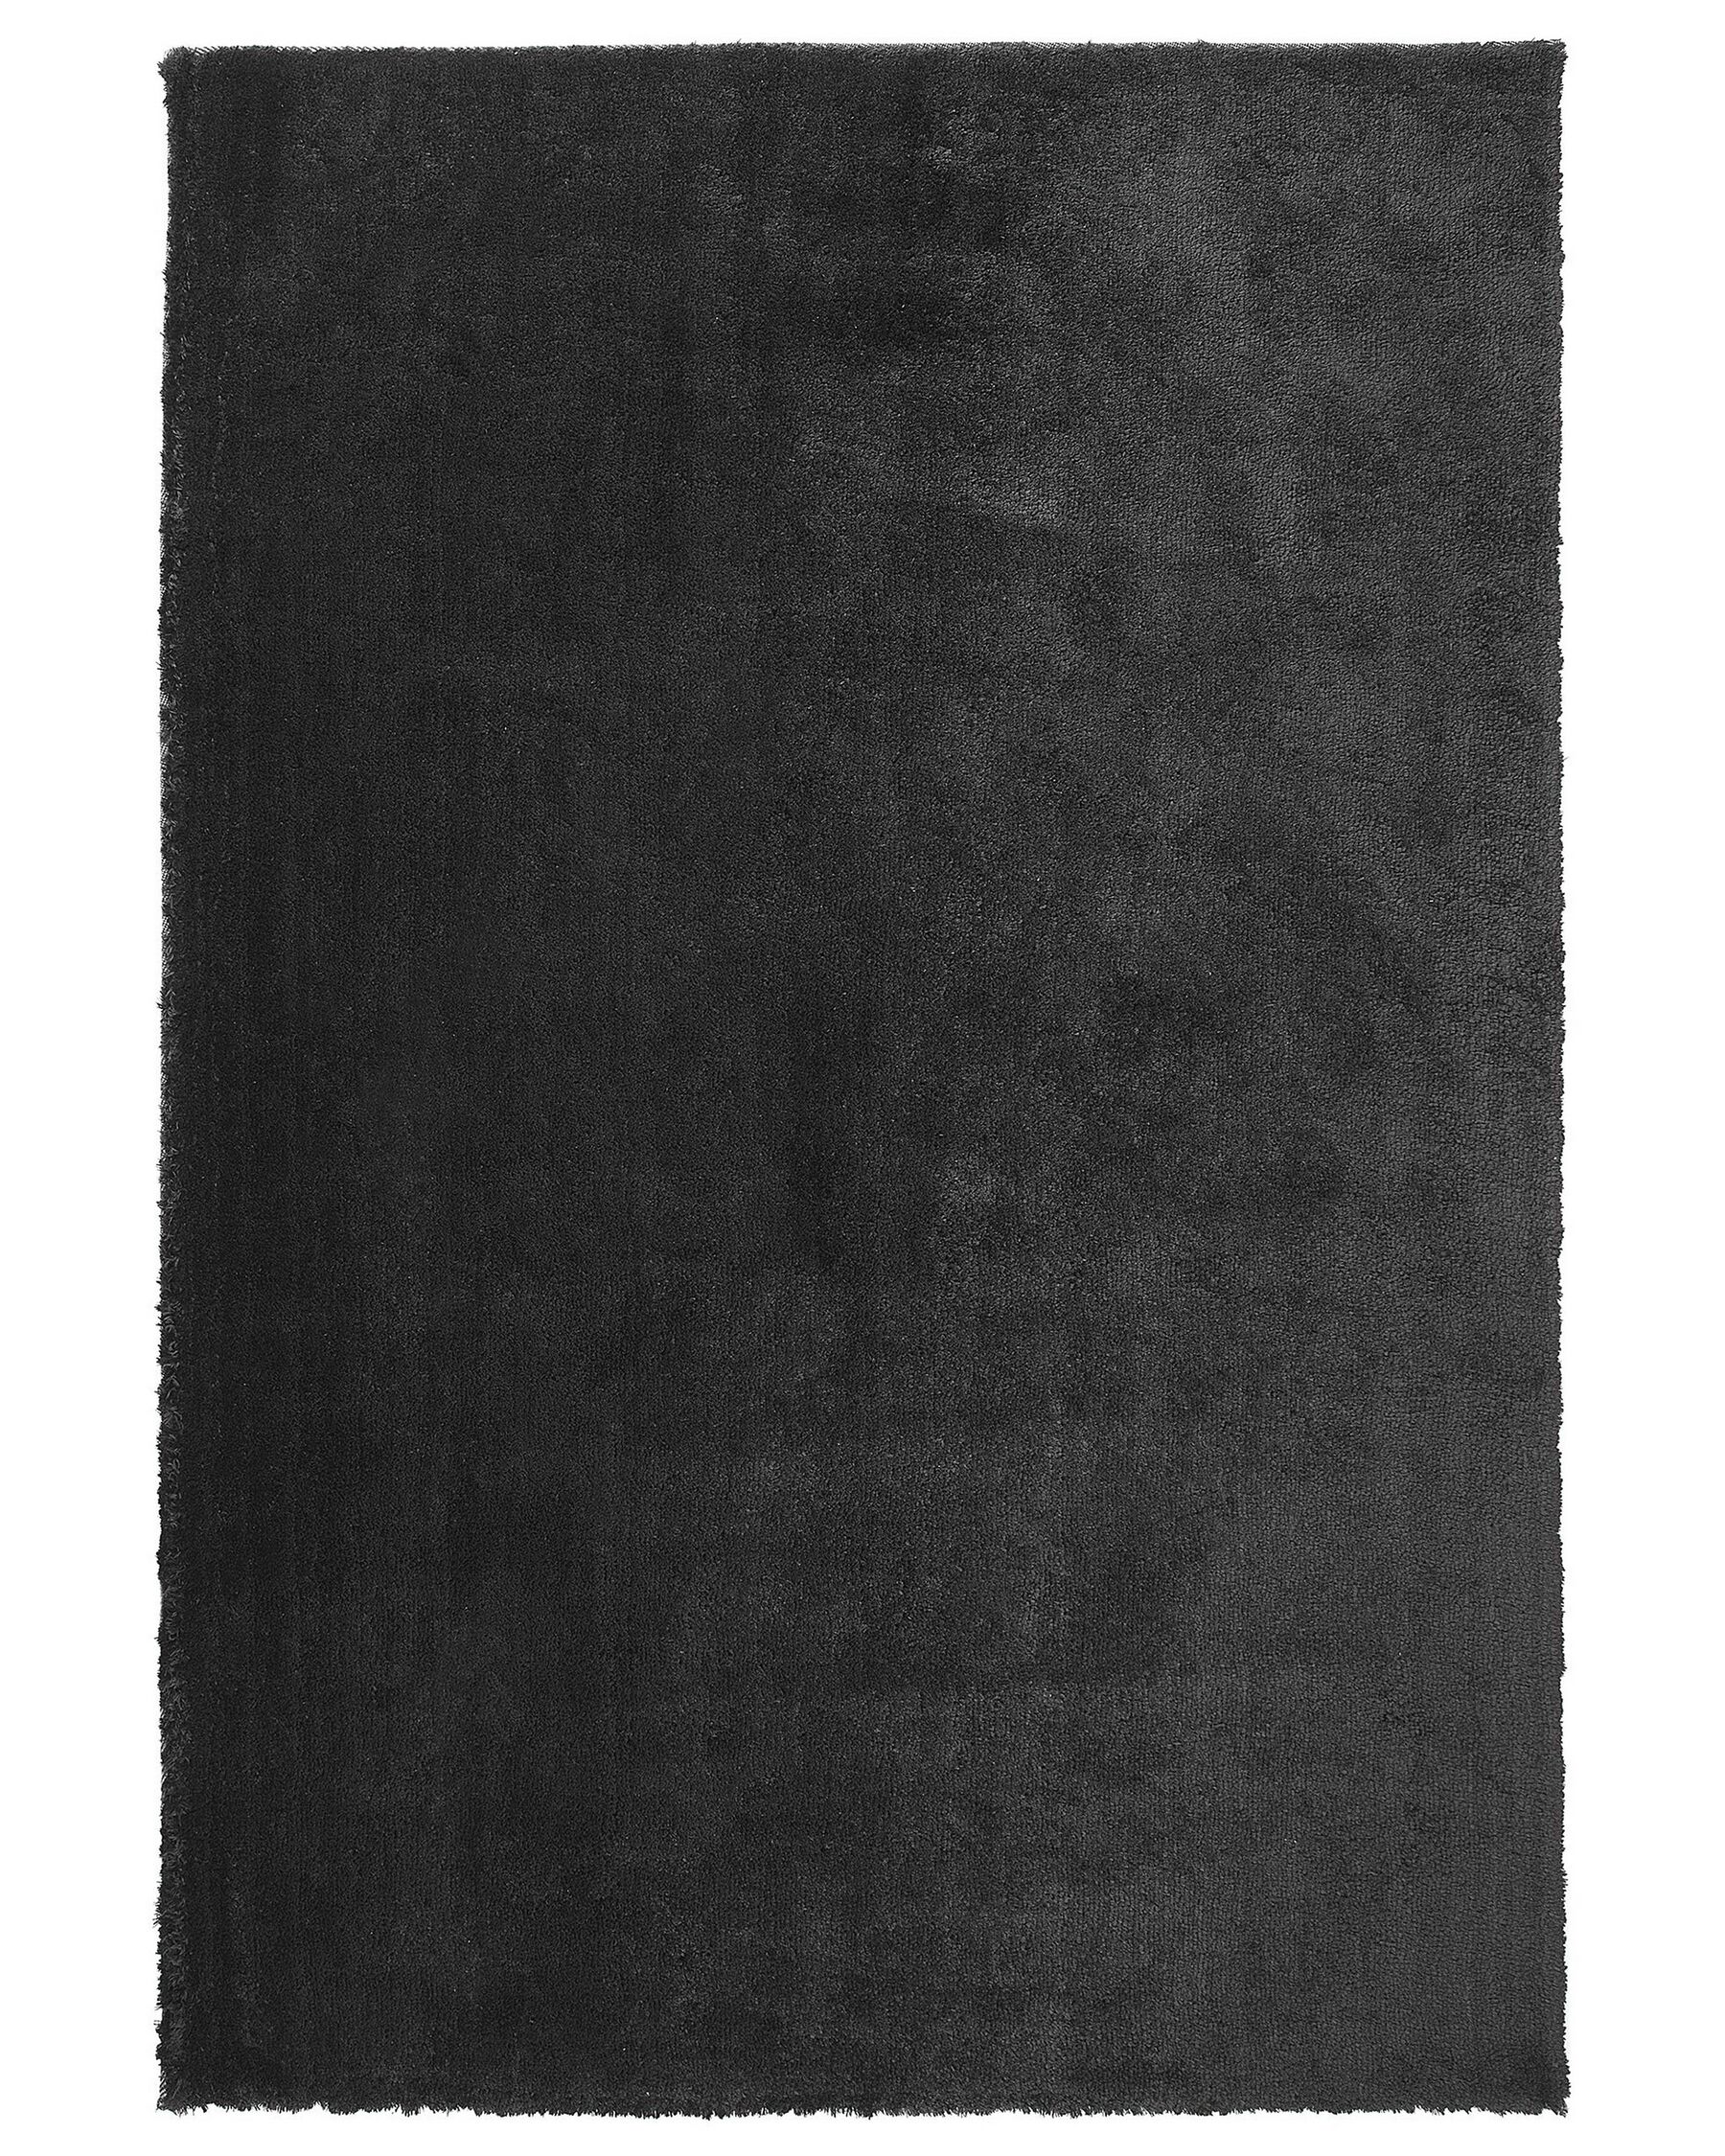 Tappeto shaggy nero 160 x 230 cm EVREN_758538